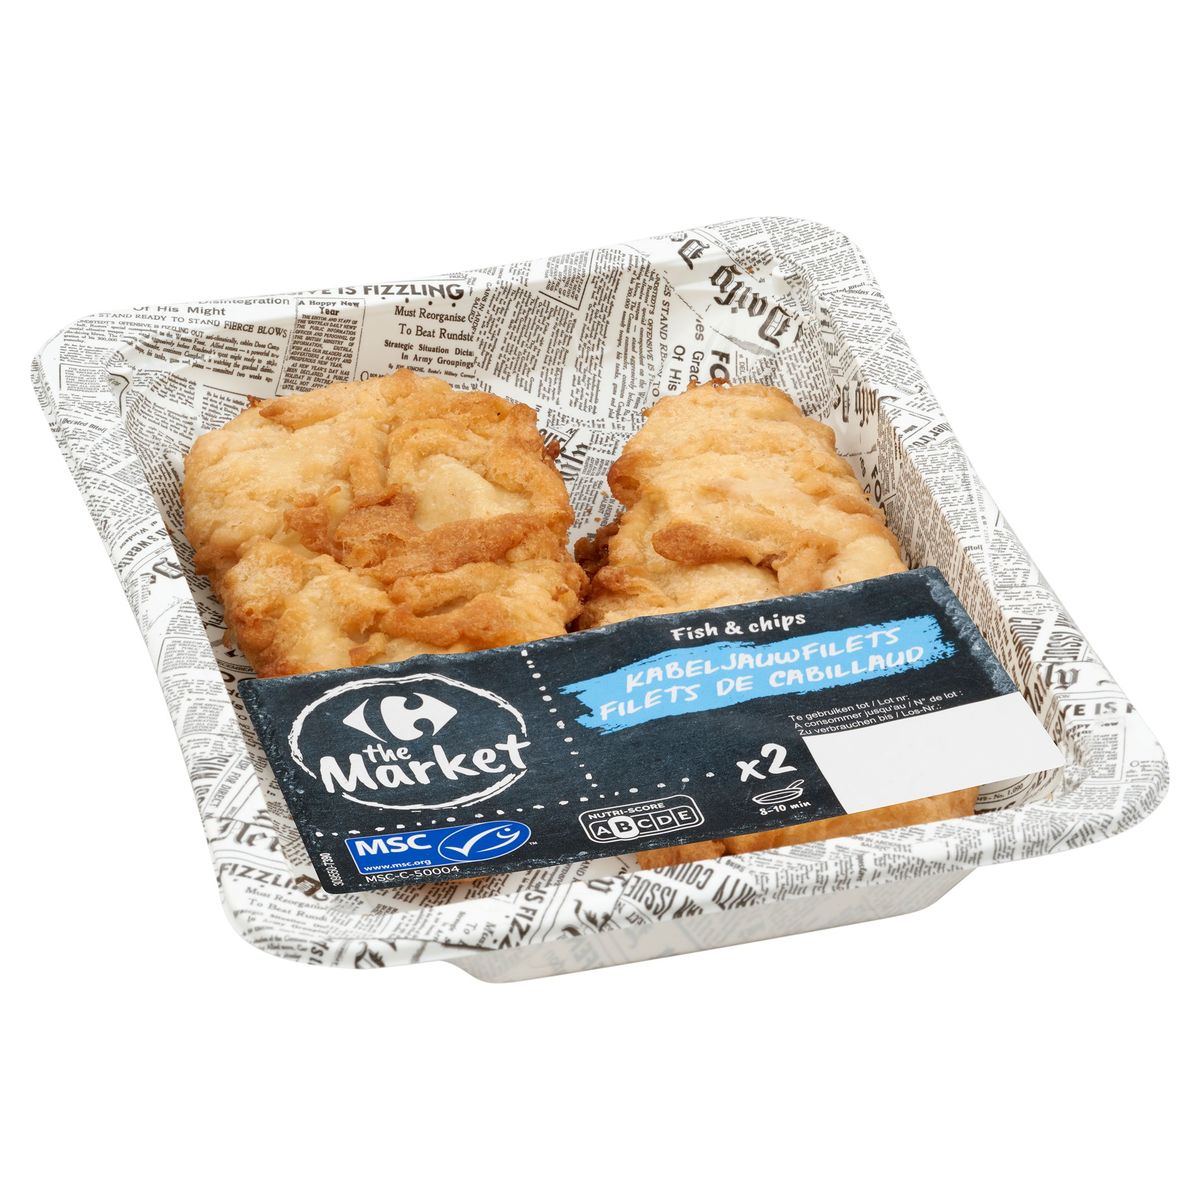 Carrefour The Market Fish & Chips Kabeljauwfilets 2 Stuks 200 g